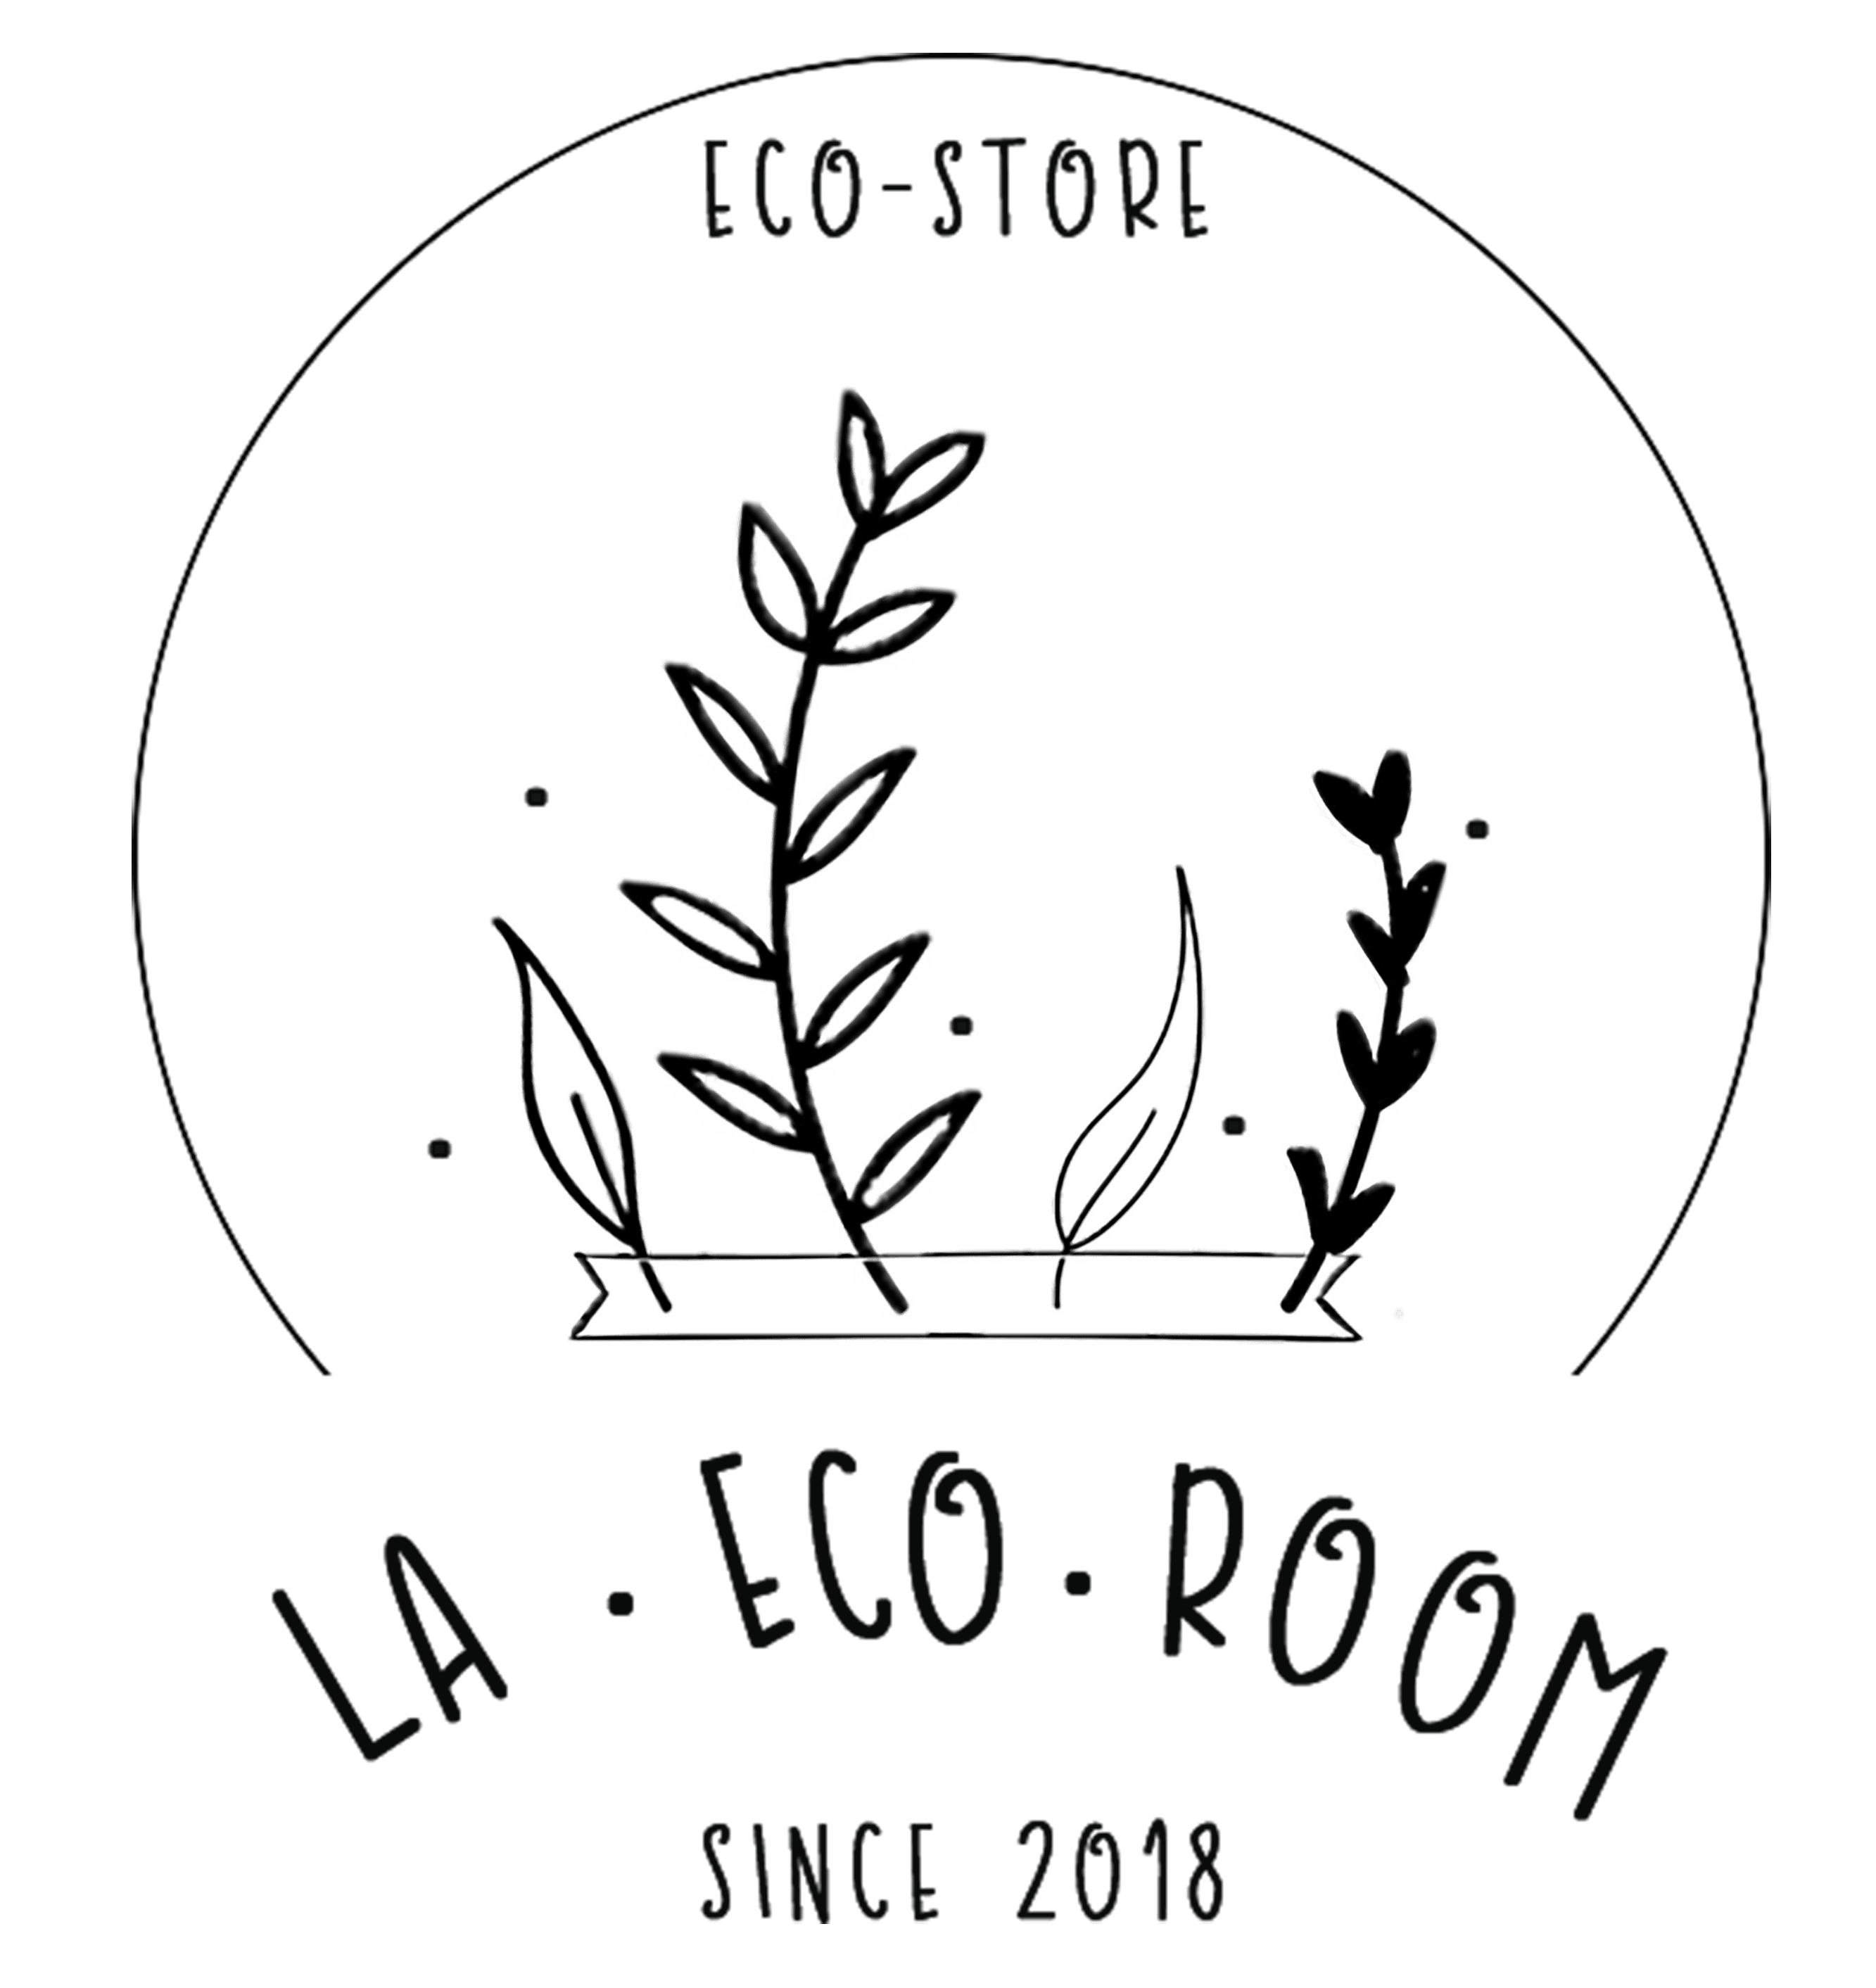 La Ecoroom